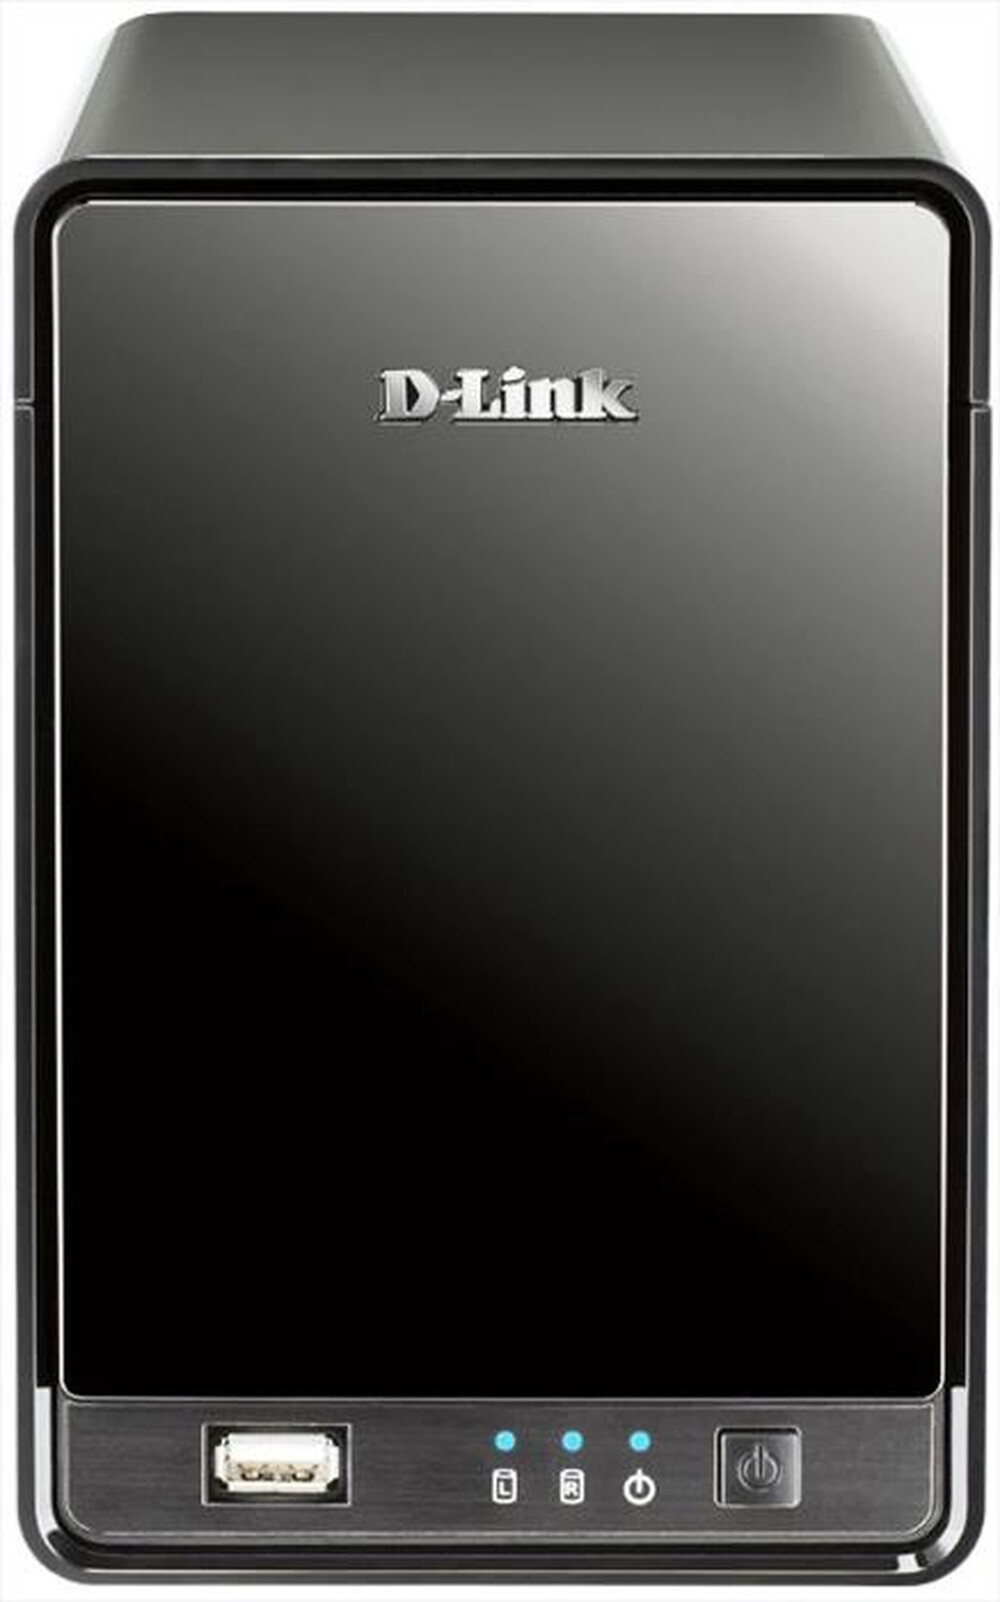 "D-LINK - DNR-322L Cloud Network Video Recorder (solo case) - "